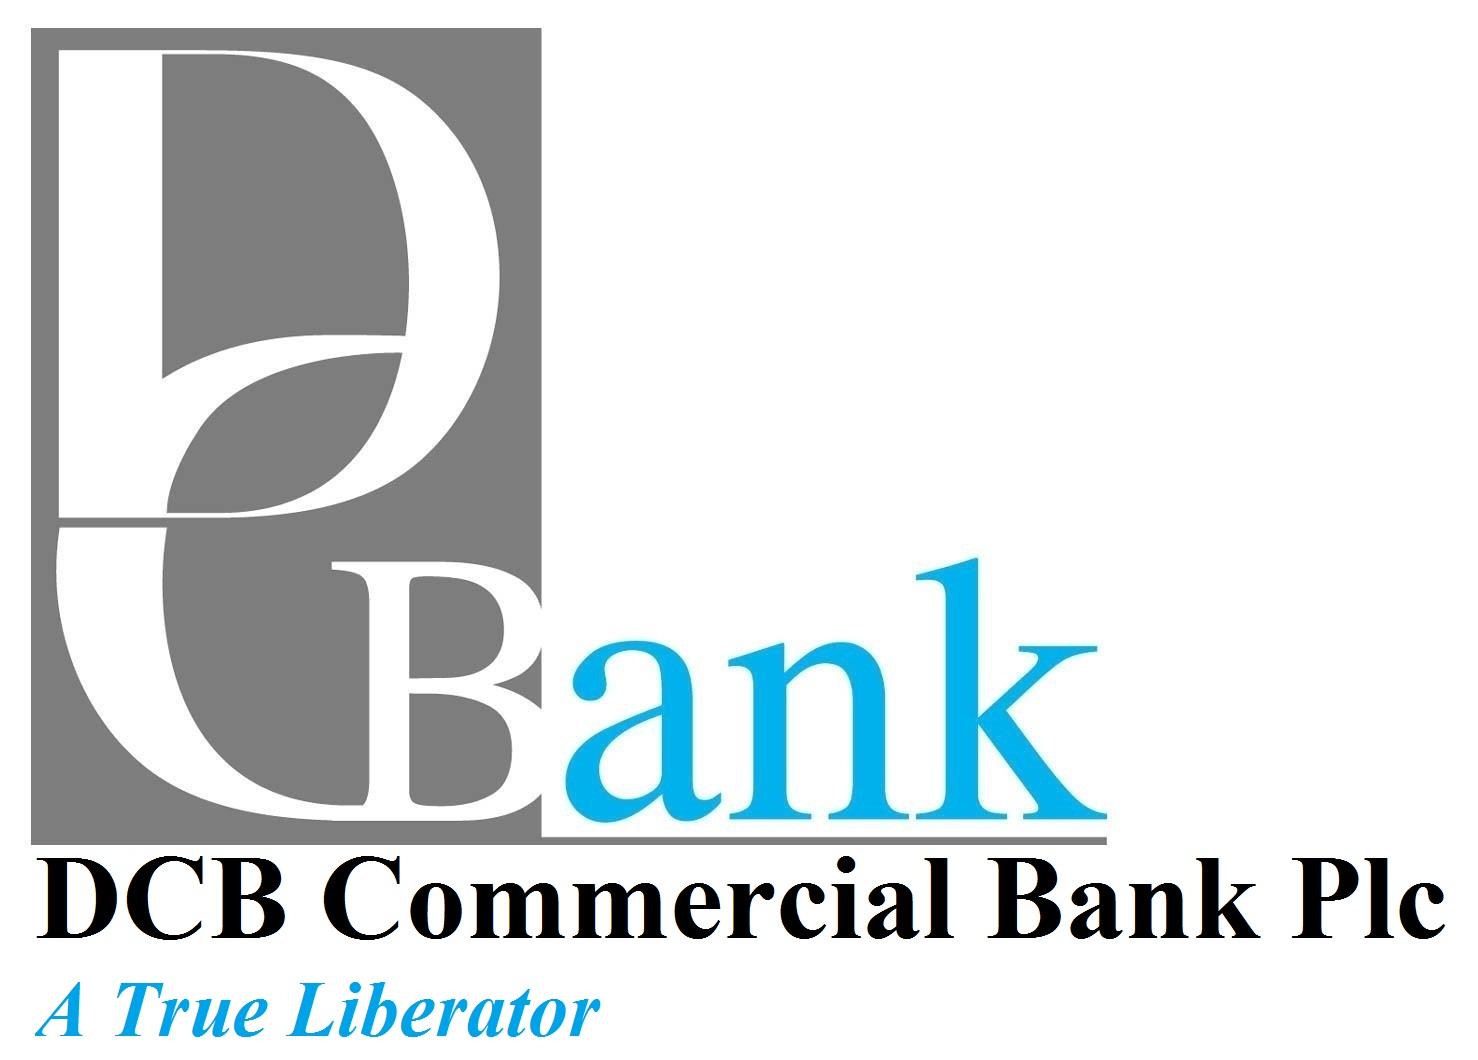 DCB Logo - DCB Commercial Bank Plc